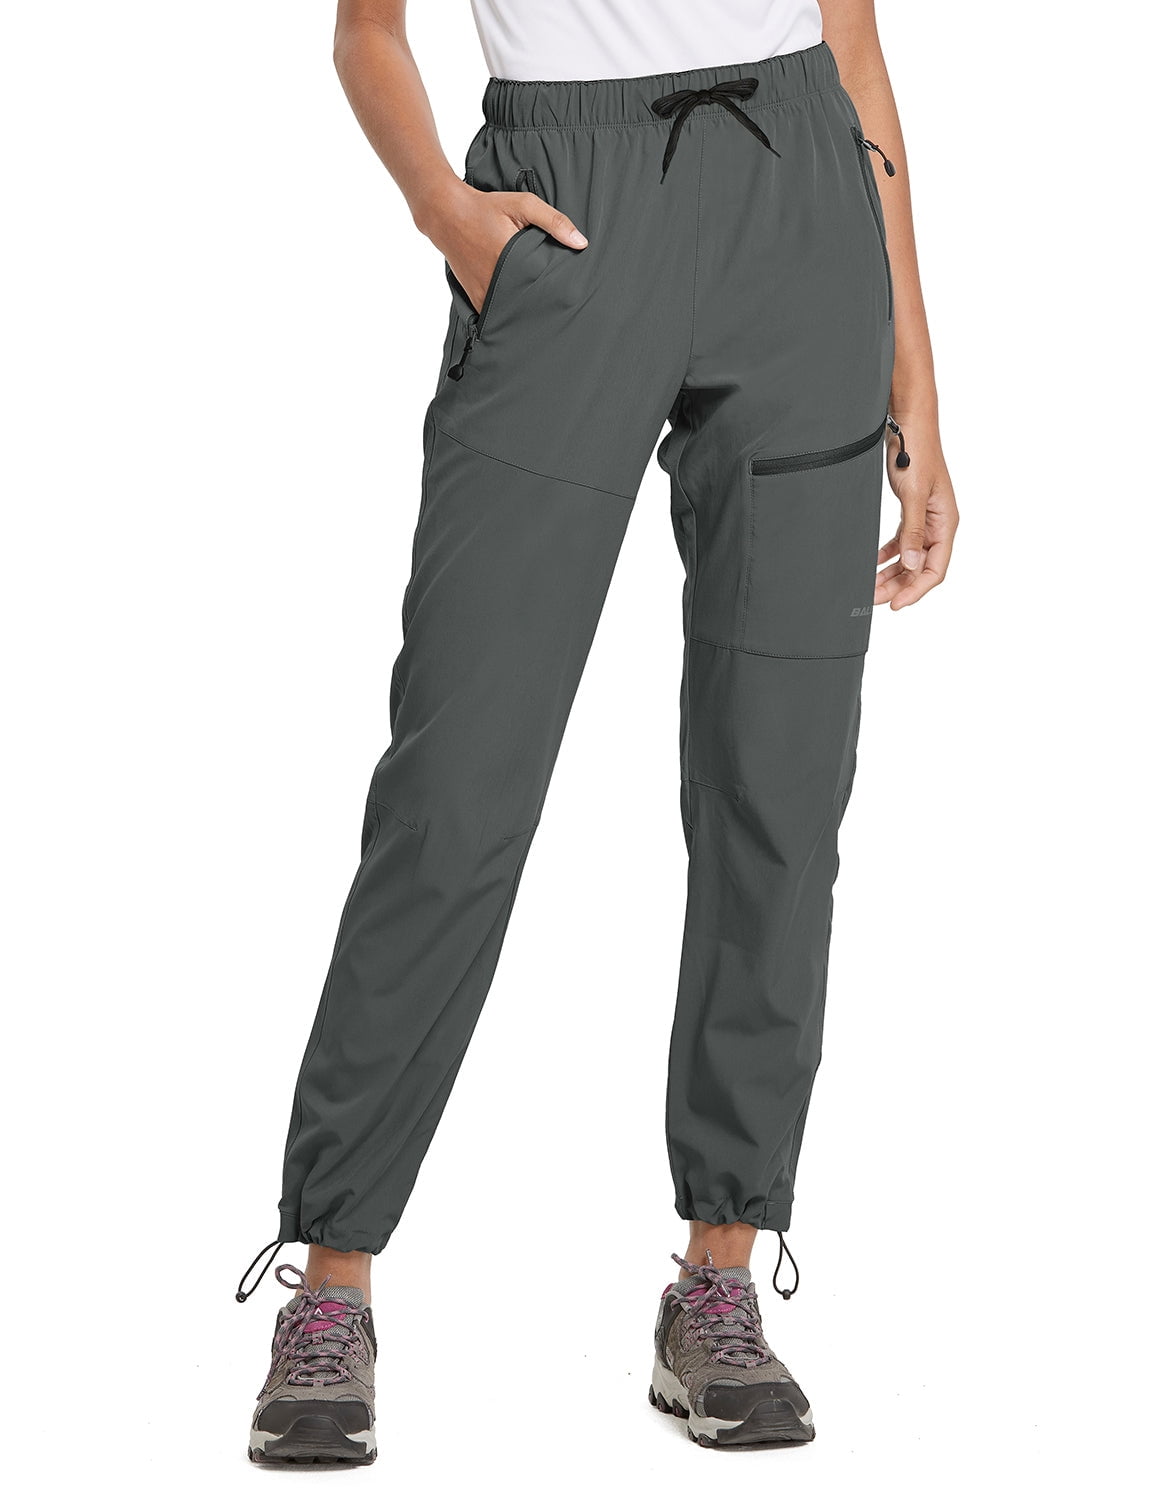 BALEAF Women's Hiking Cargo Pants Outdoor Lightweight Capris Water Resistant UPF 50 Zipper Pockets 